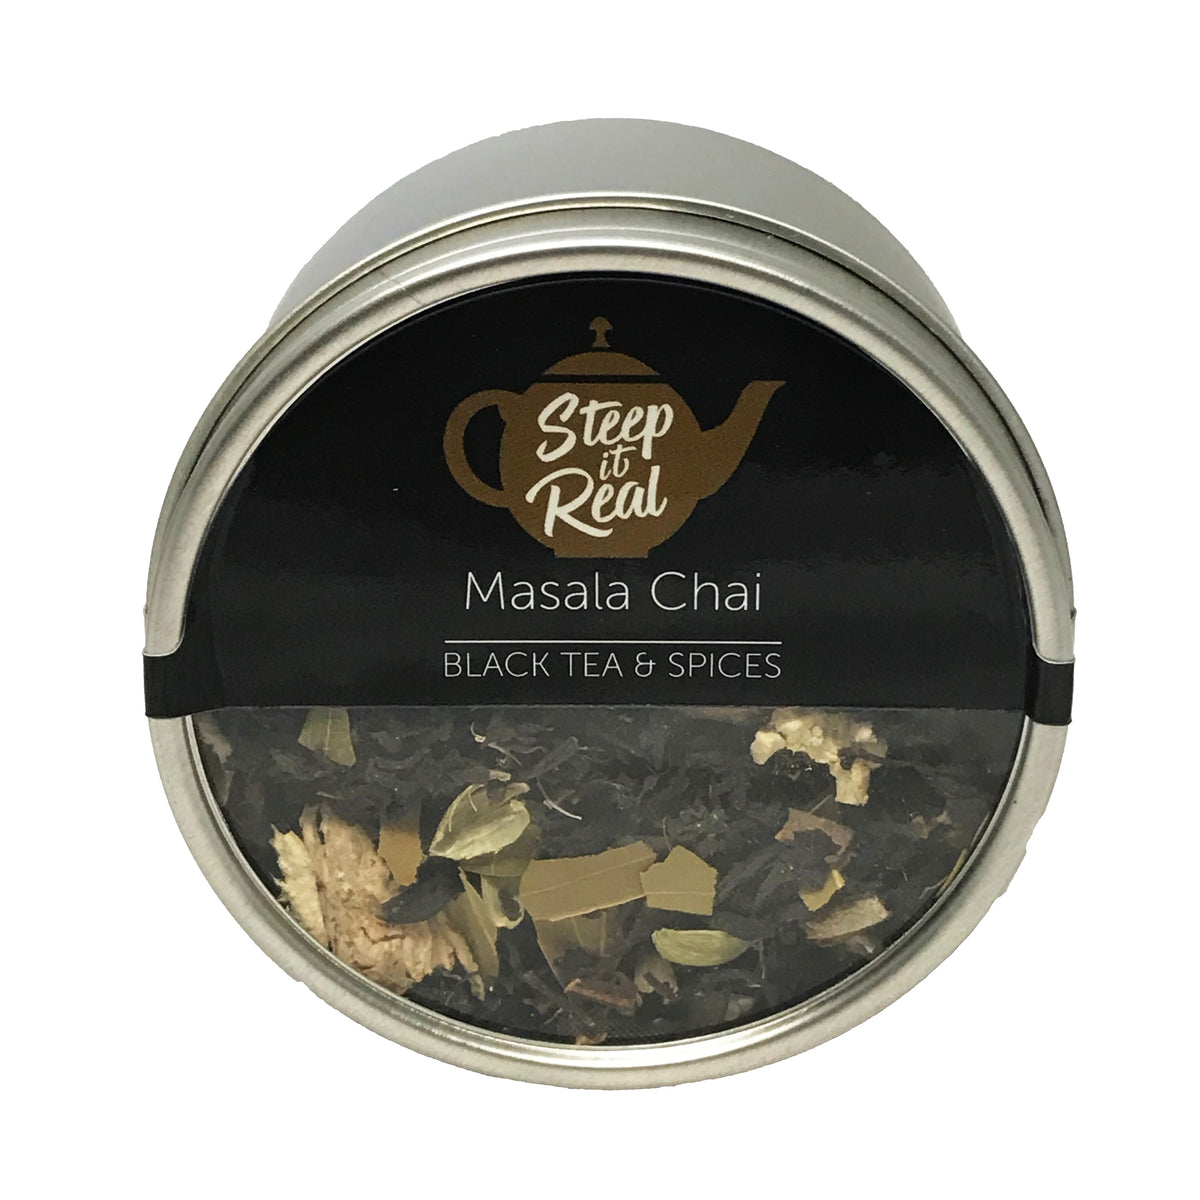 Masala Chai - I Have a Bean